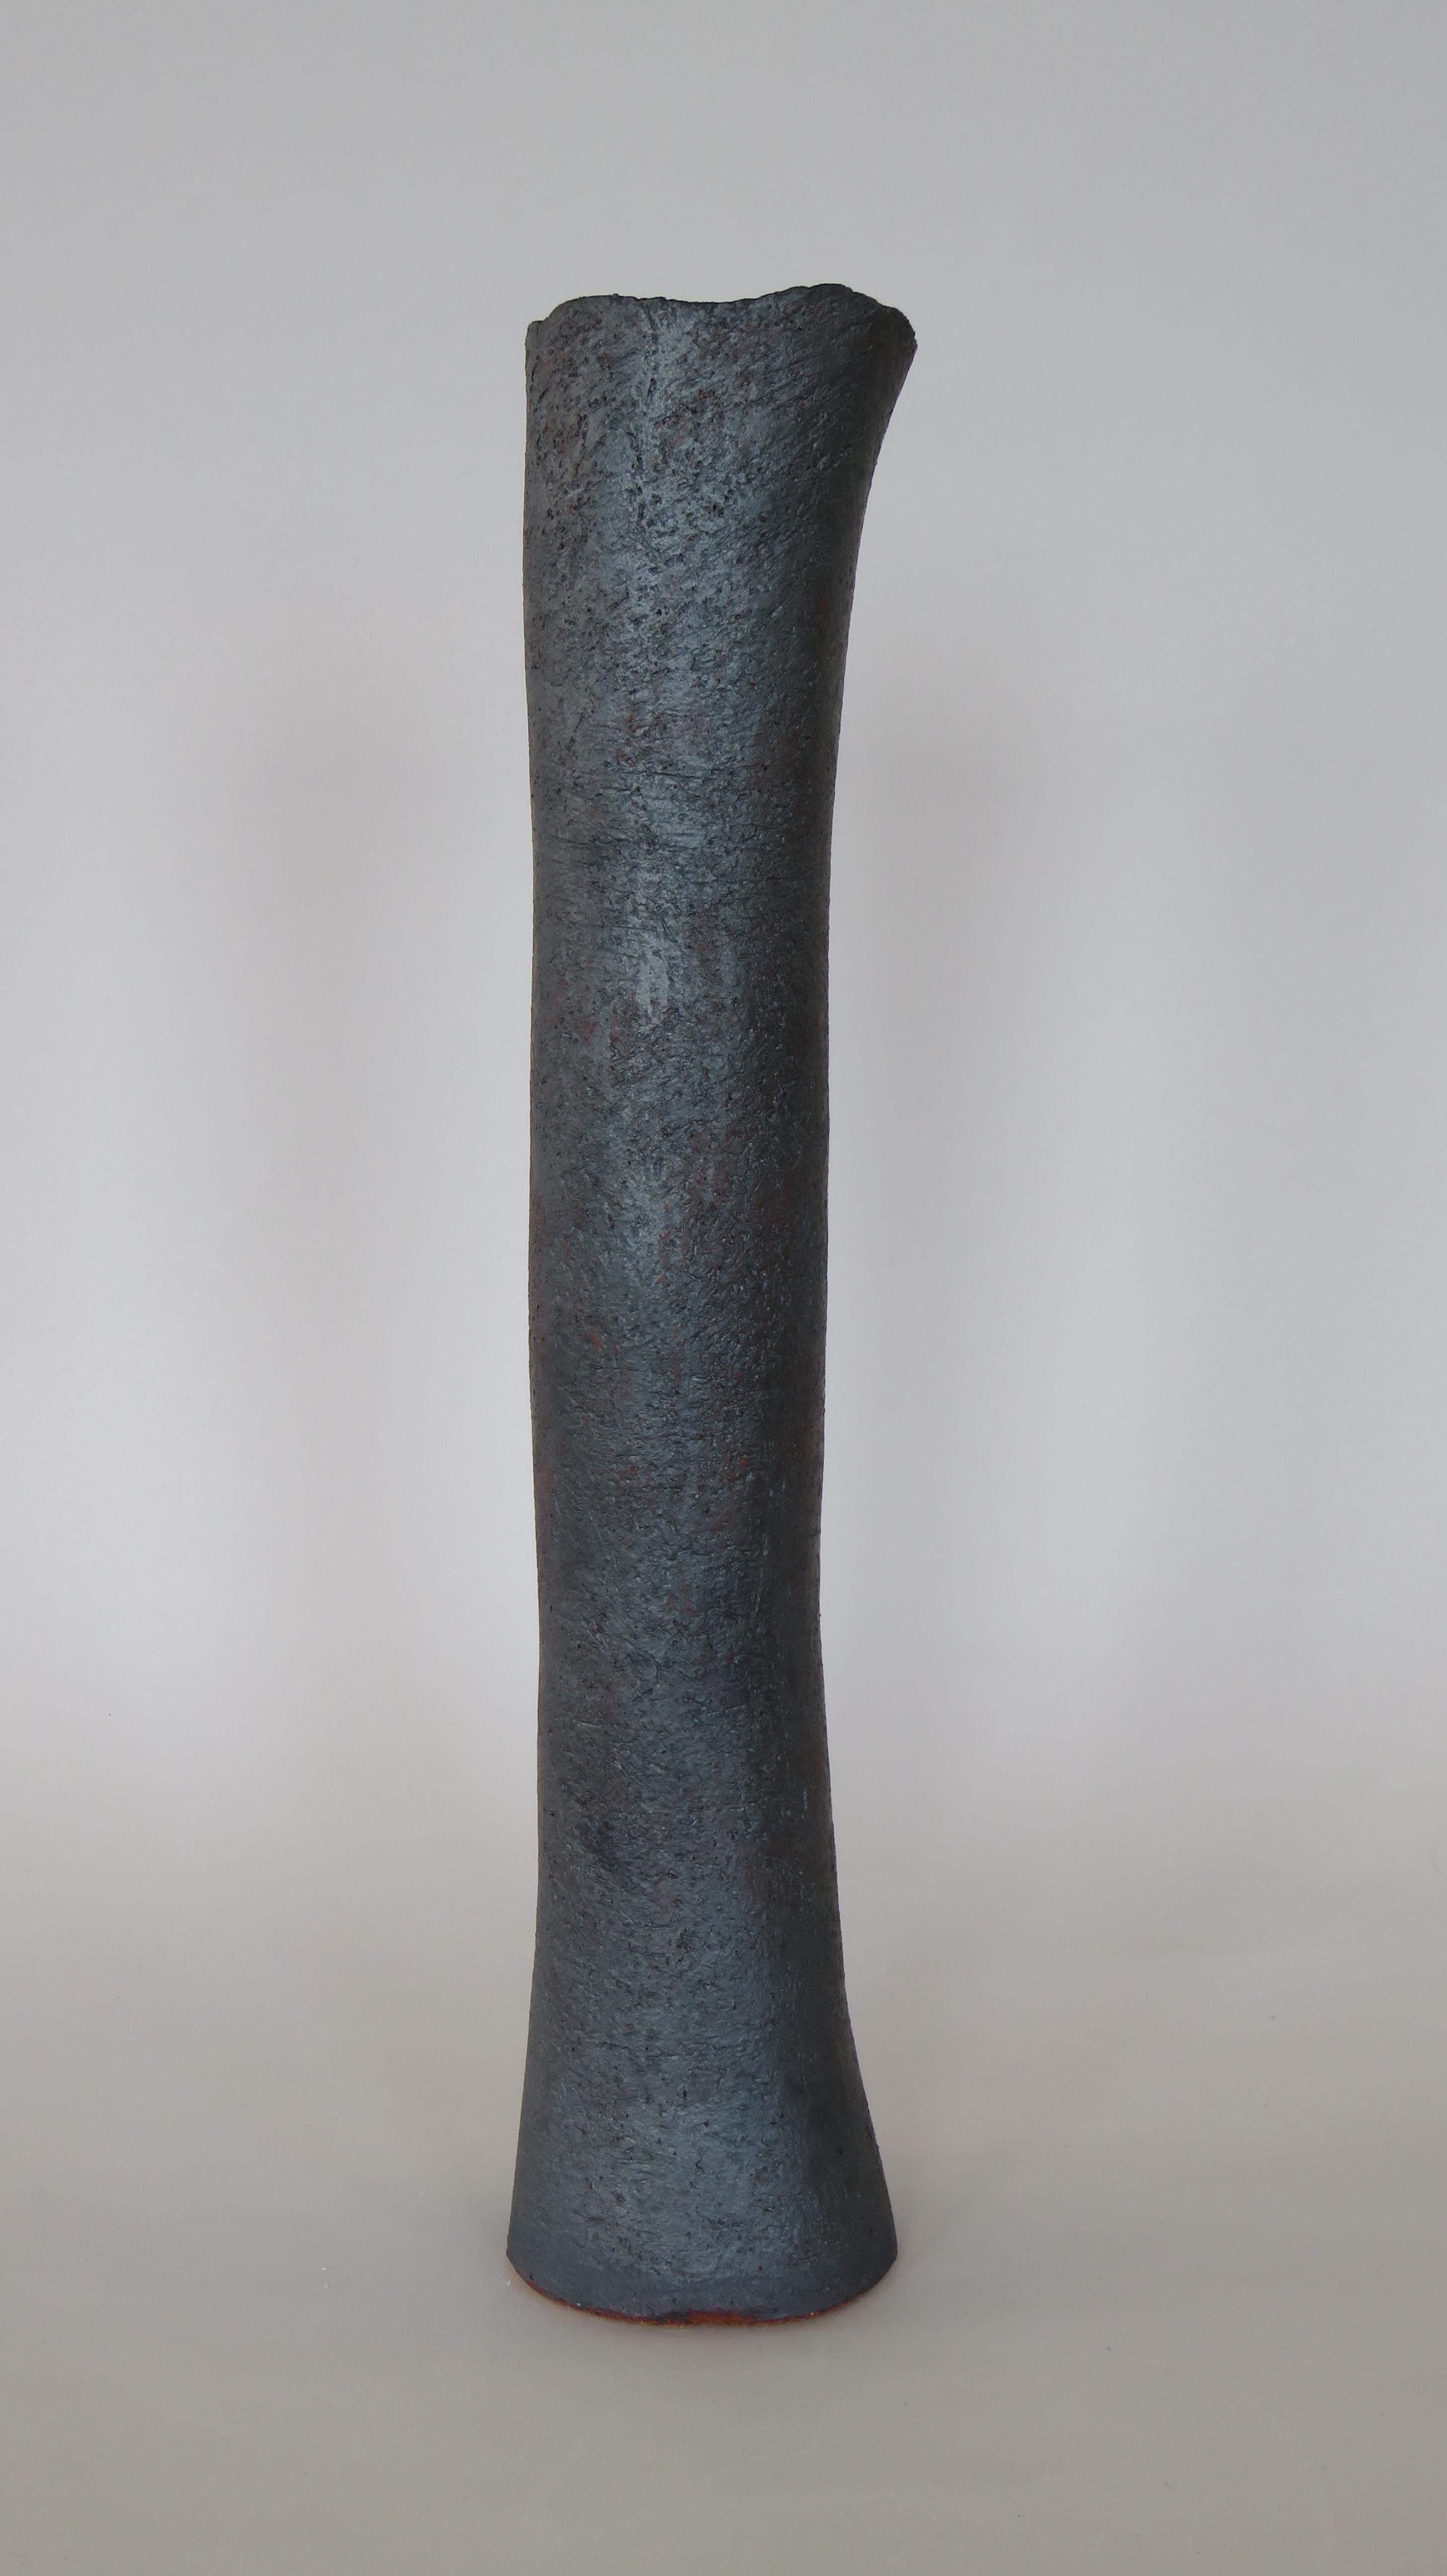 Contemporary Tall, Tubular Metallic Black Stoneware Vase, 18 3/8 Inches High, Handbuilt